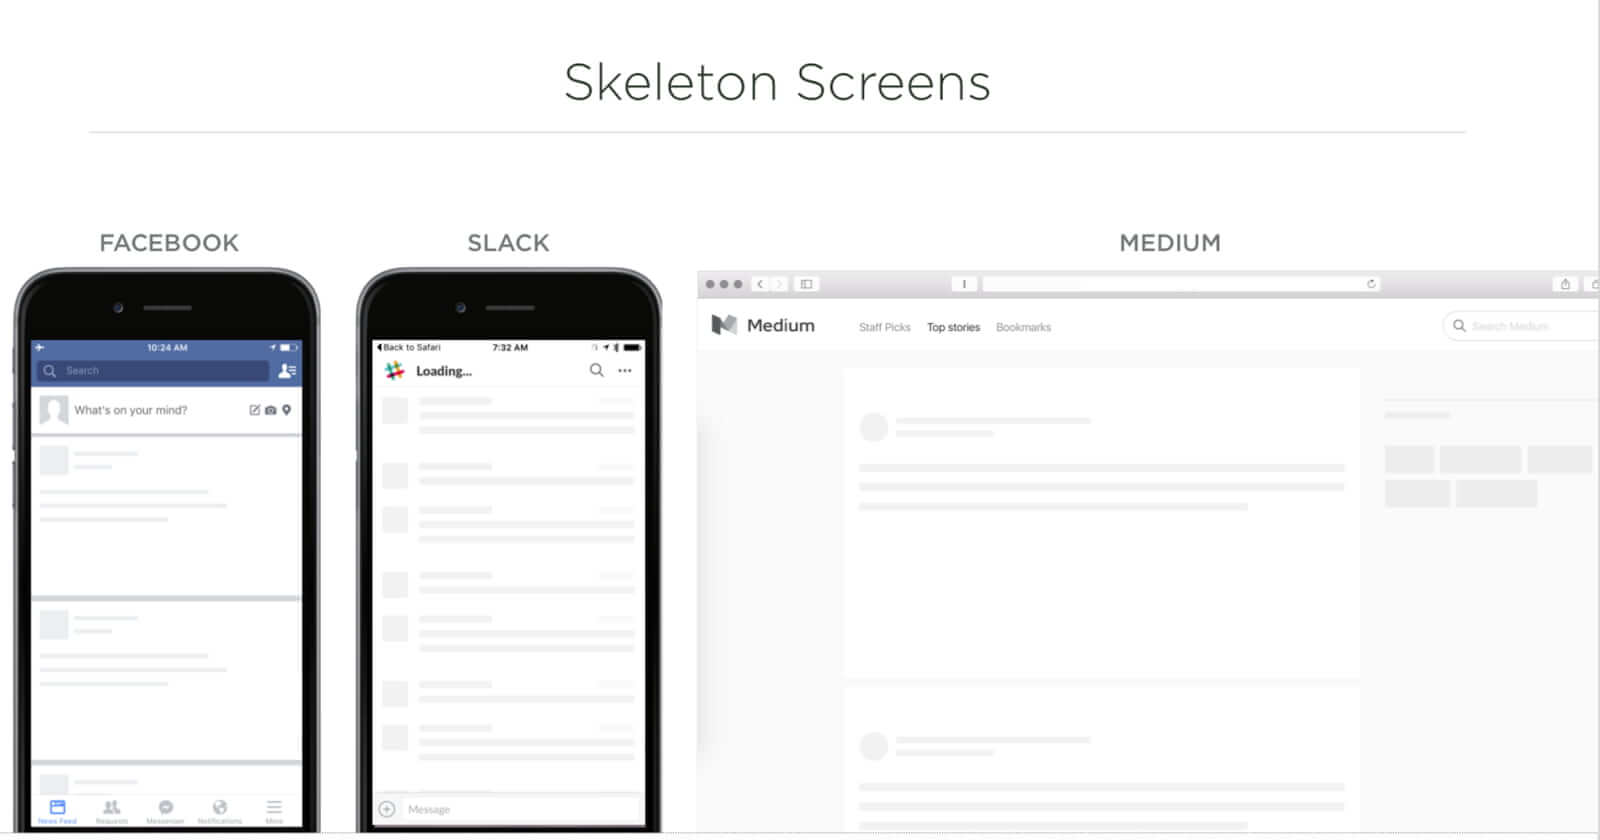 skeleton screens make a website feel faster.